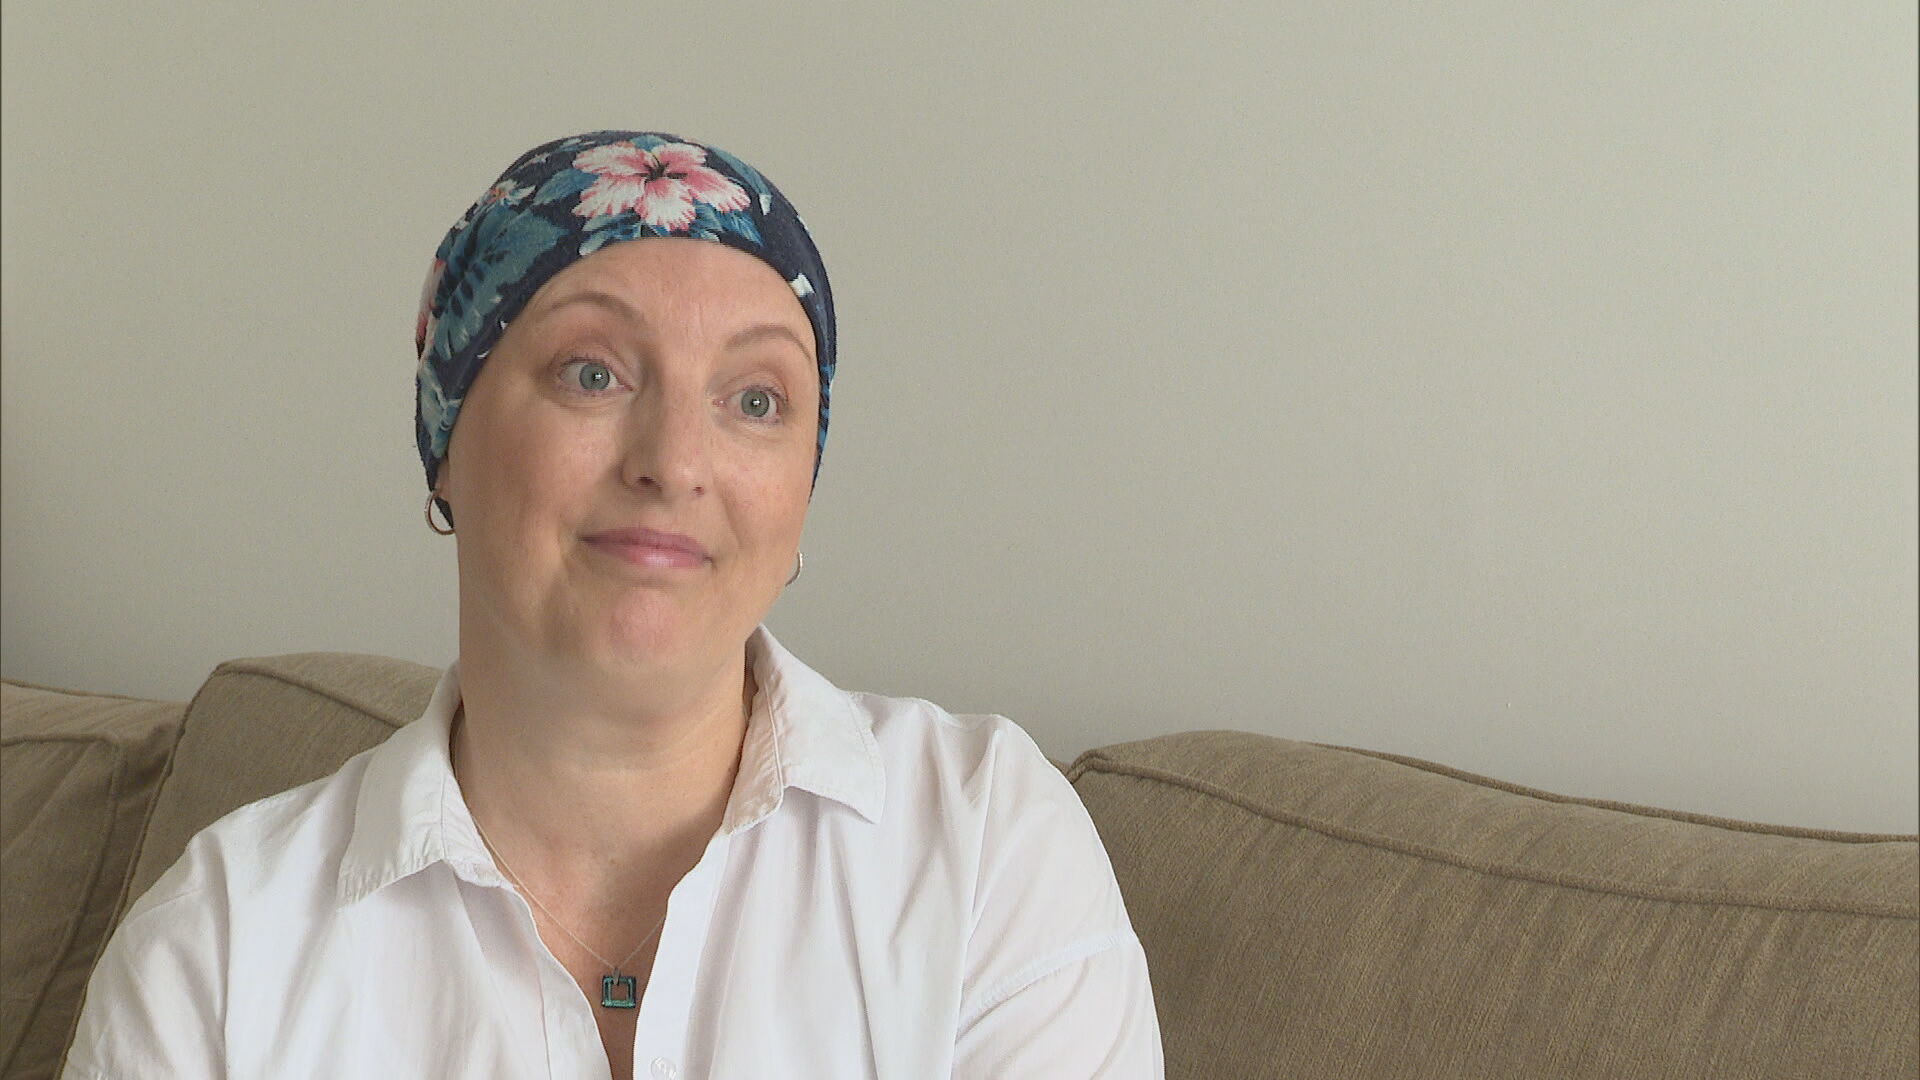 Lisa Megginson had her mesh implant removed 11 weeks ago